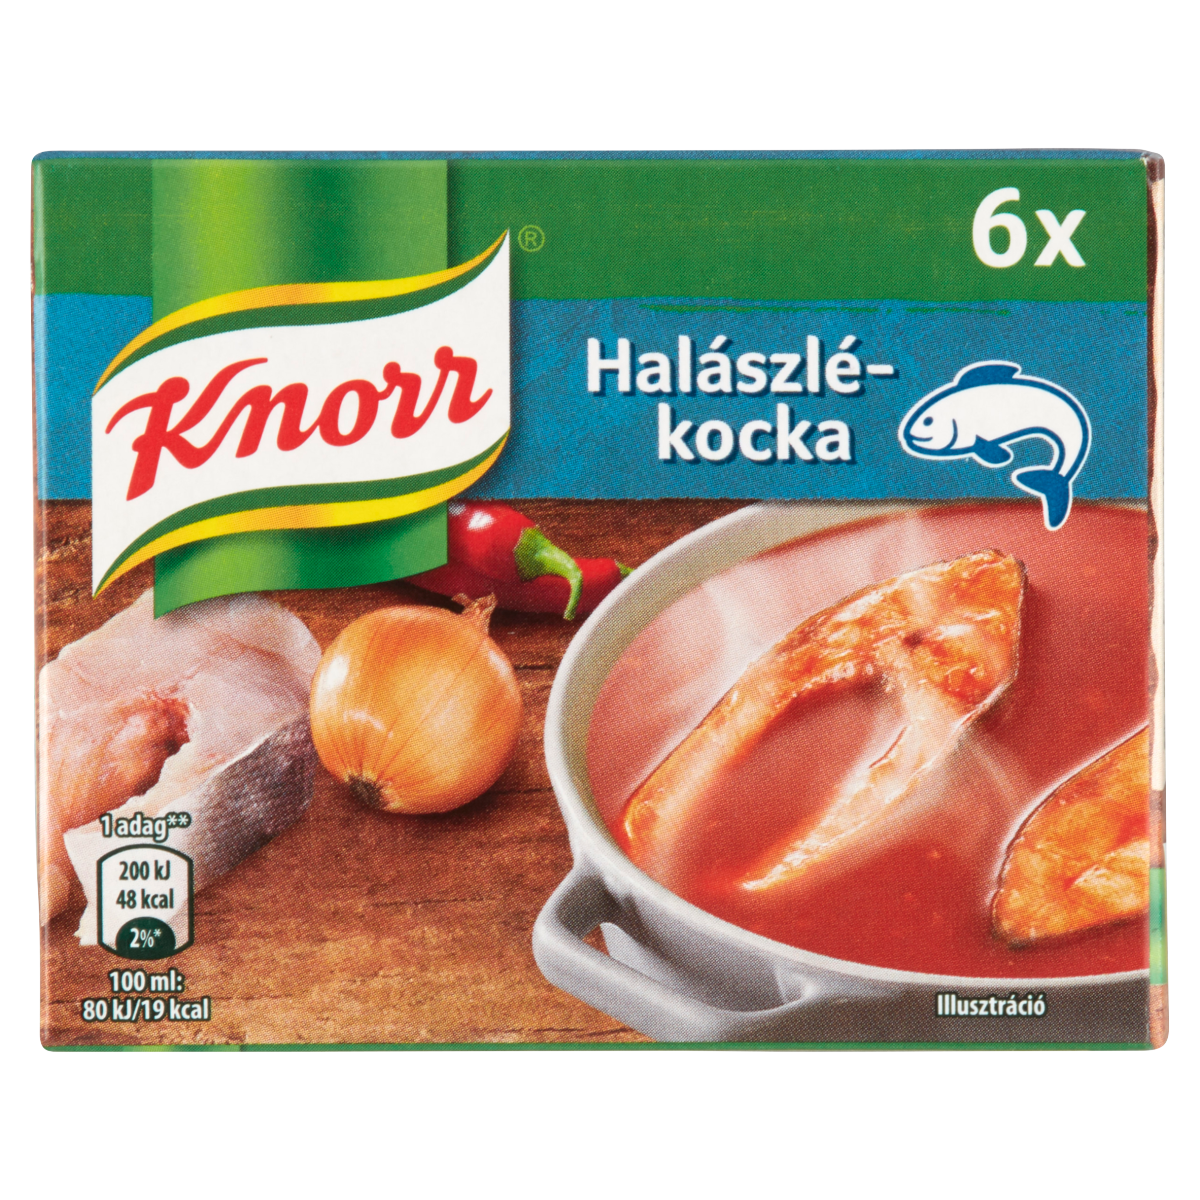 Knorr kocka 60 g Halászlé